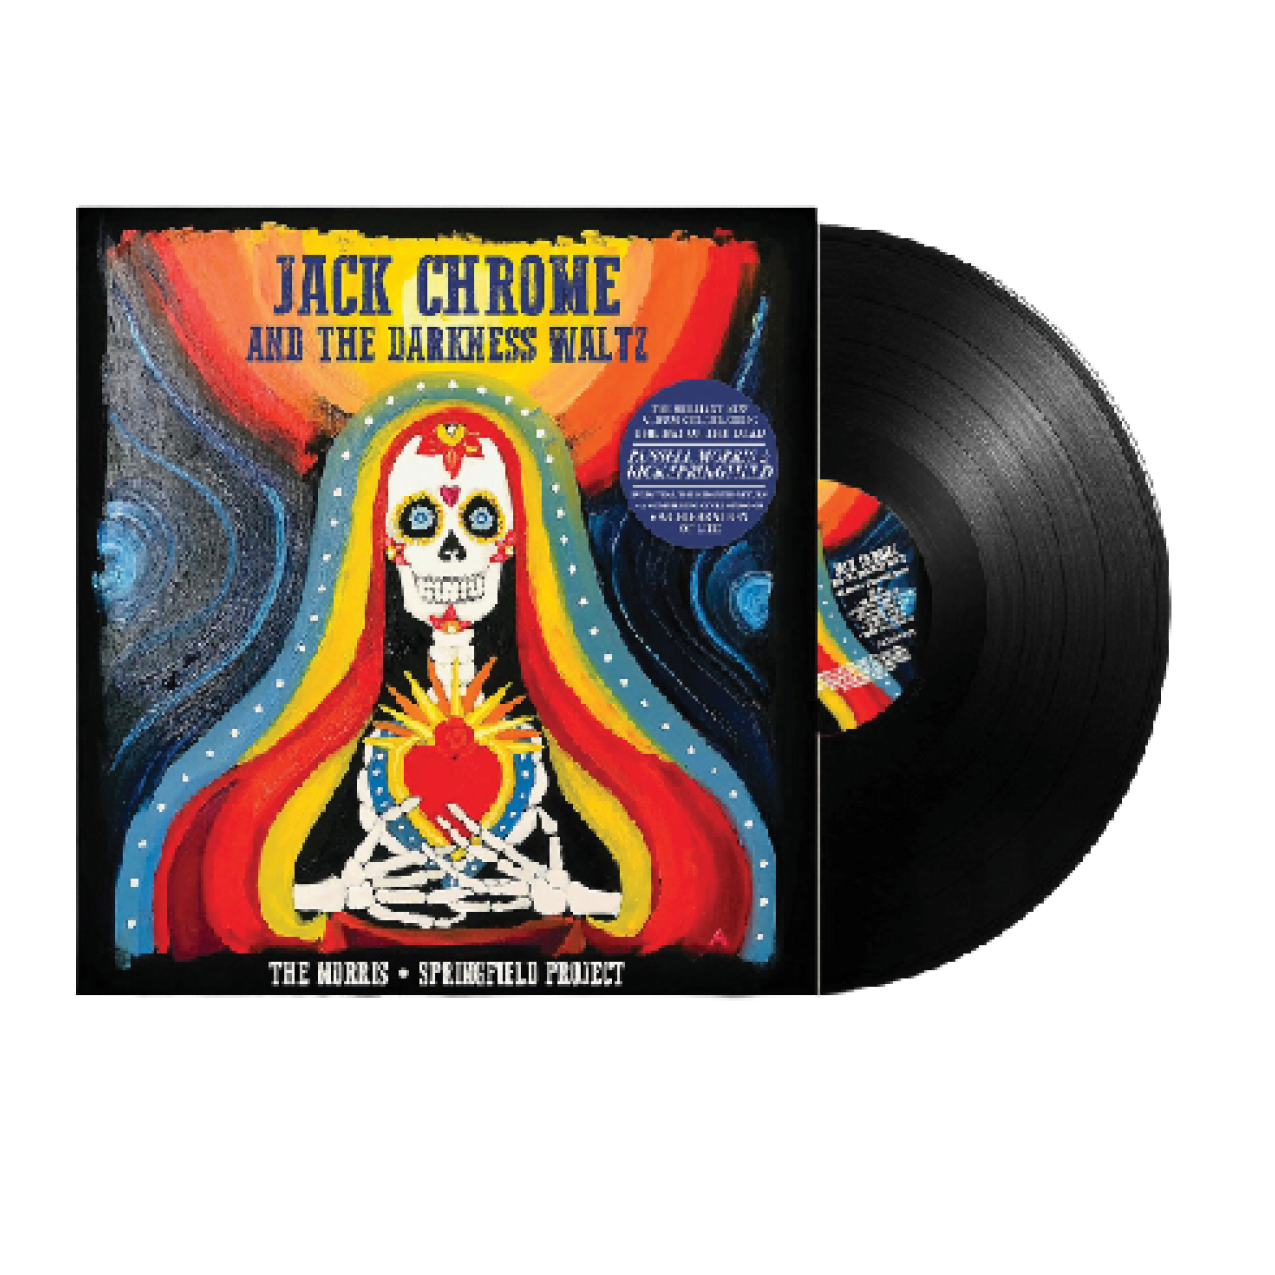 JACK CHROME AND THE DARKNESS WALTZ (Vinyl)